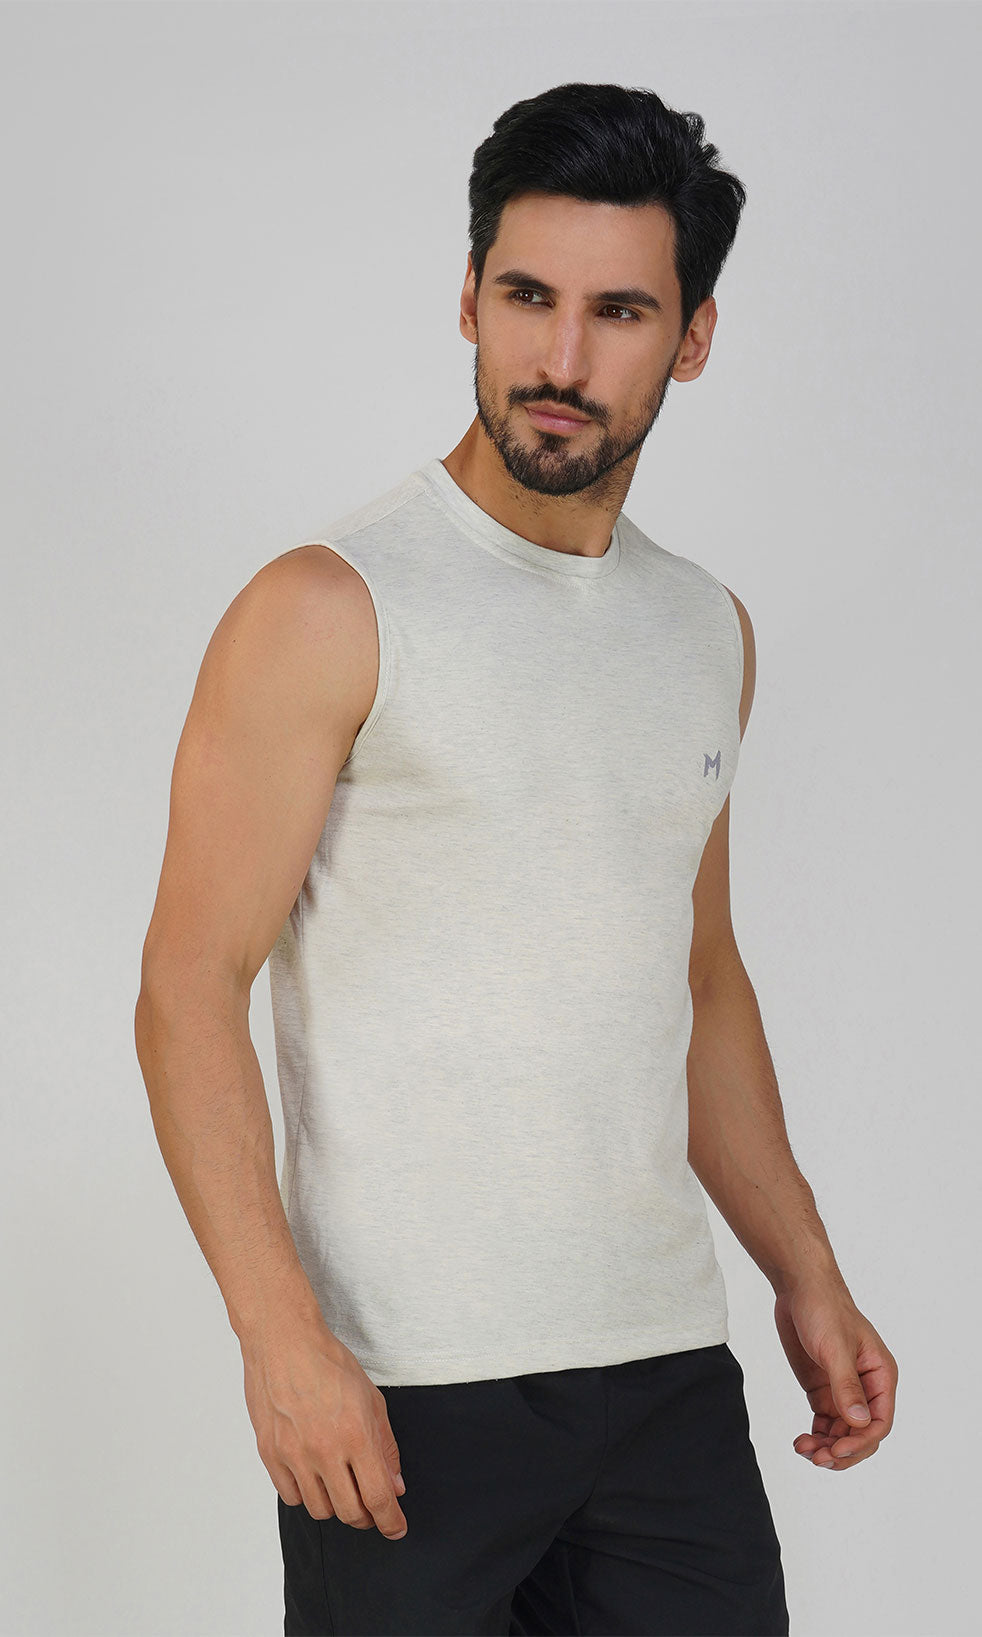 Mebadass Cotton Men's Sleeveless Regular Size Vests - Light Grey